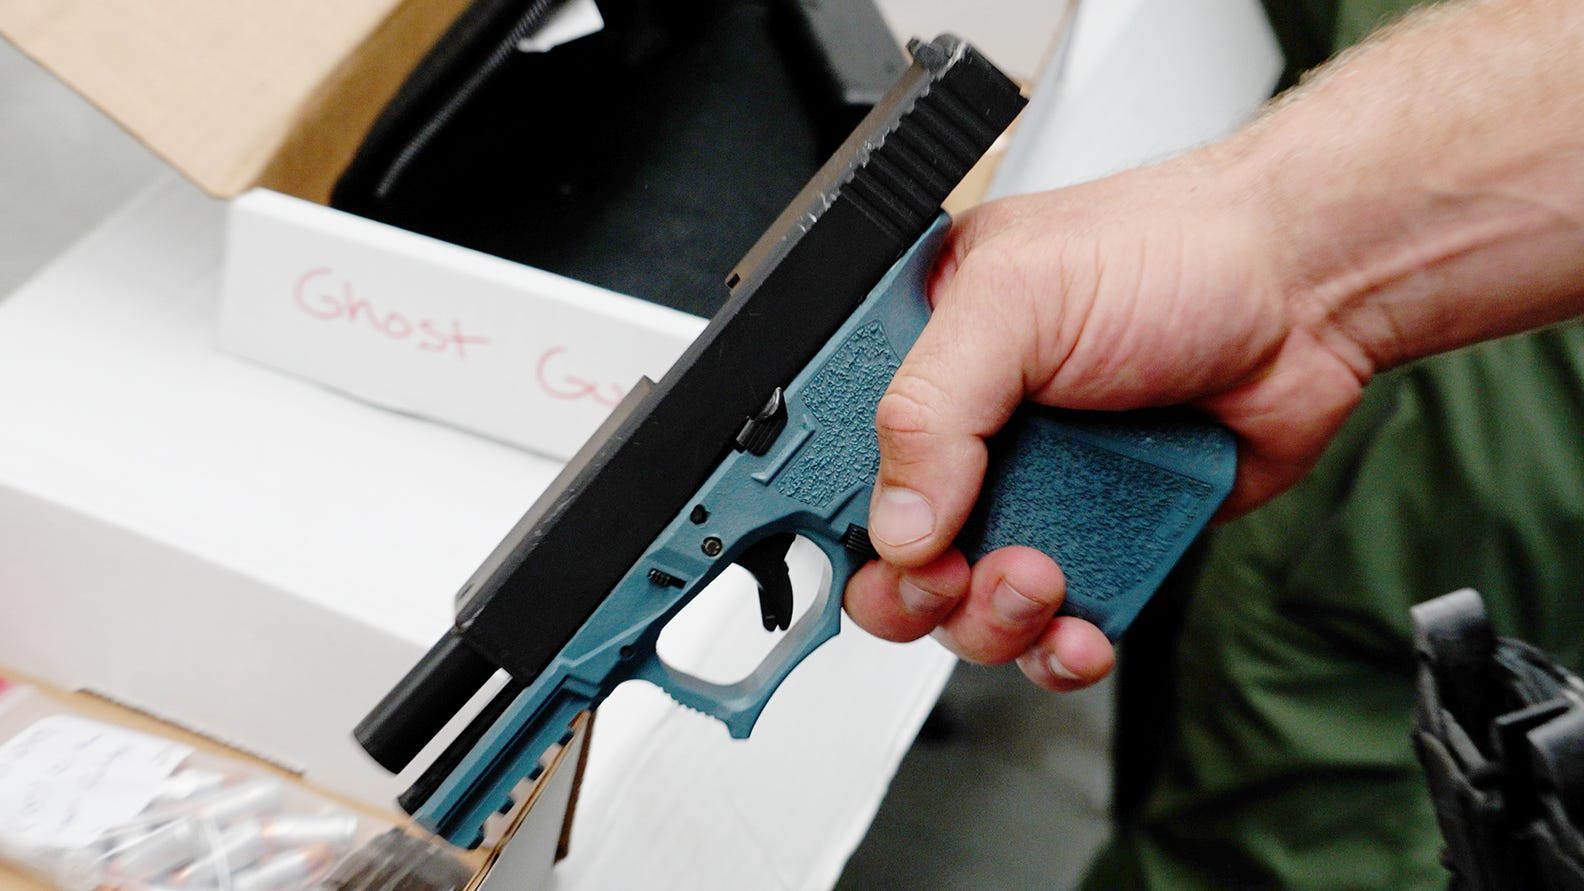 Pa. House advances measure to prohibit ‘ghost guns’